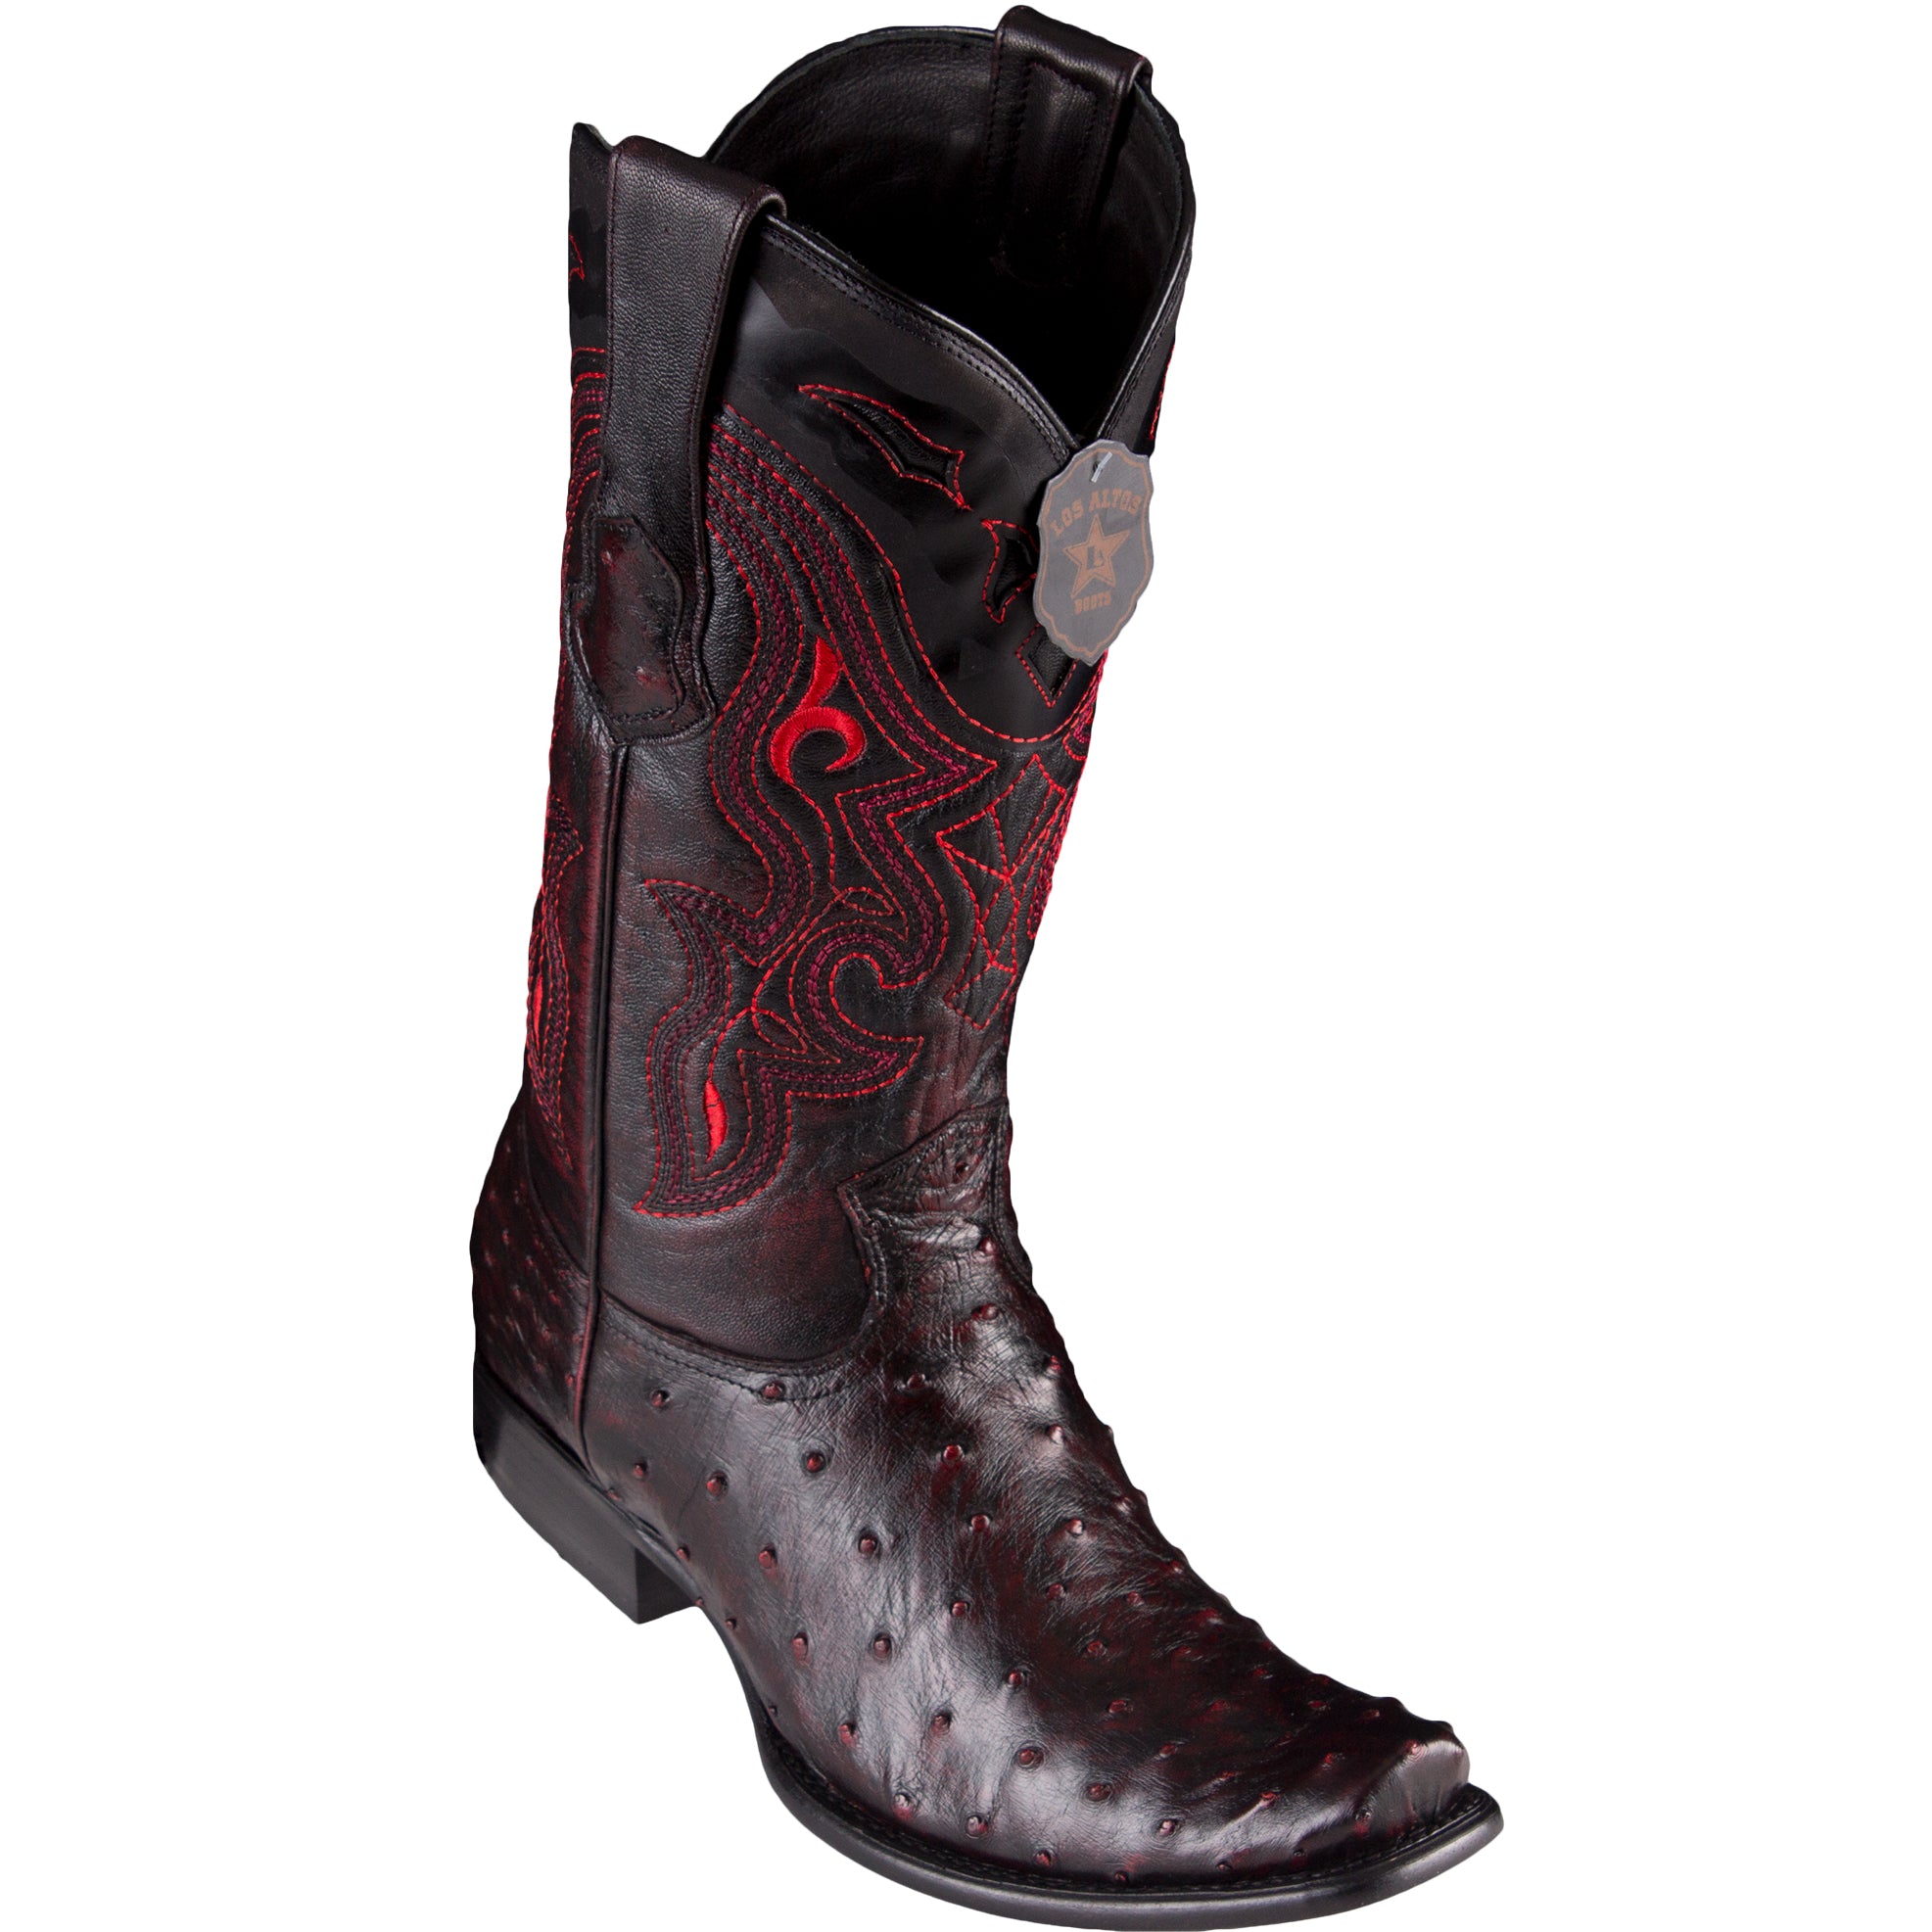 King Exotic Black Cherry Cowboy Boots - H79 Dubai Toe